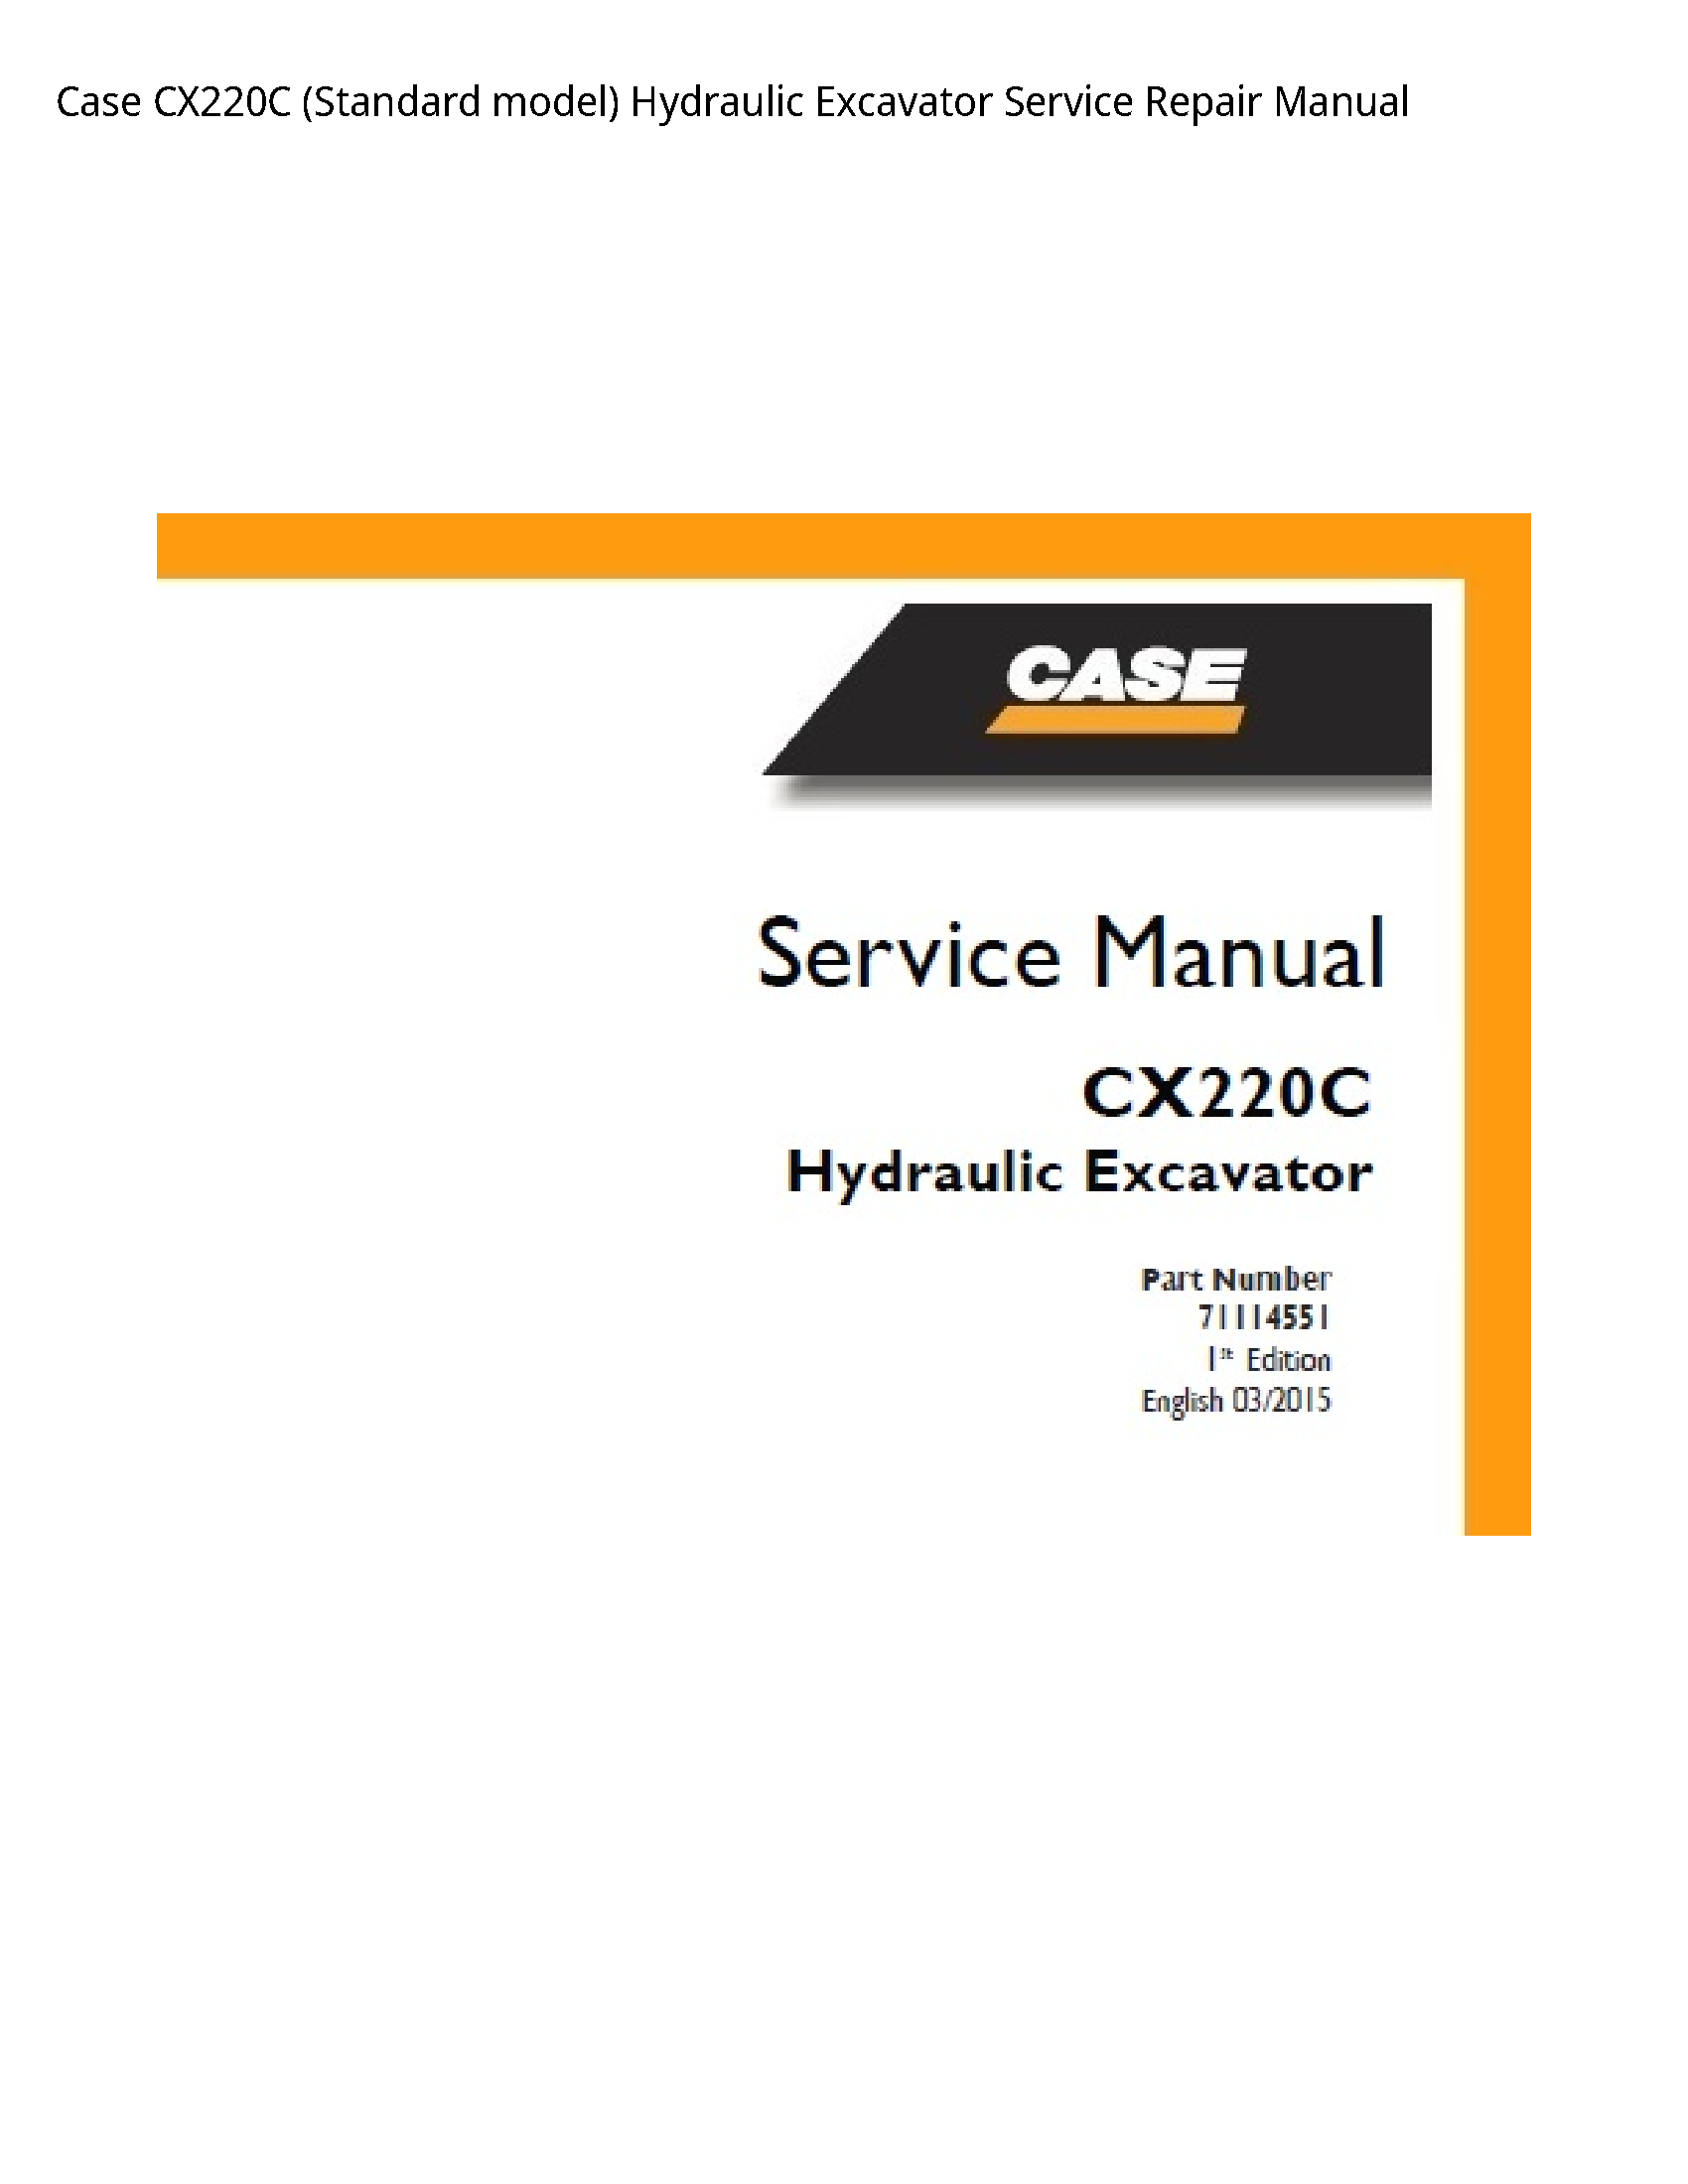 Case/Case IH CX220C (Standard model) Hydraulic Excavator manual